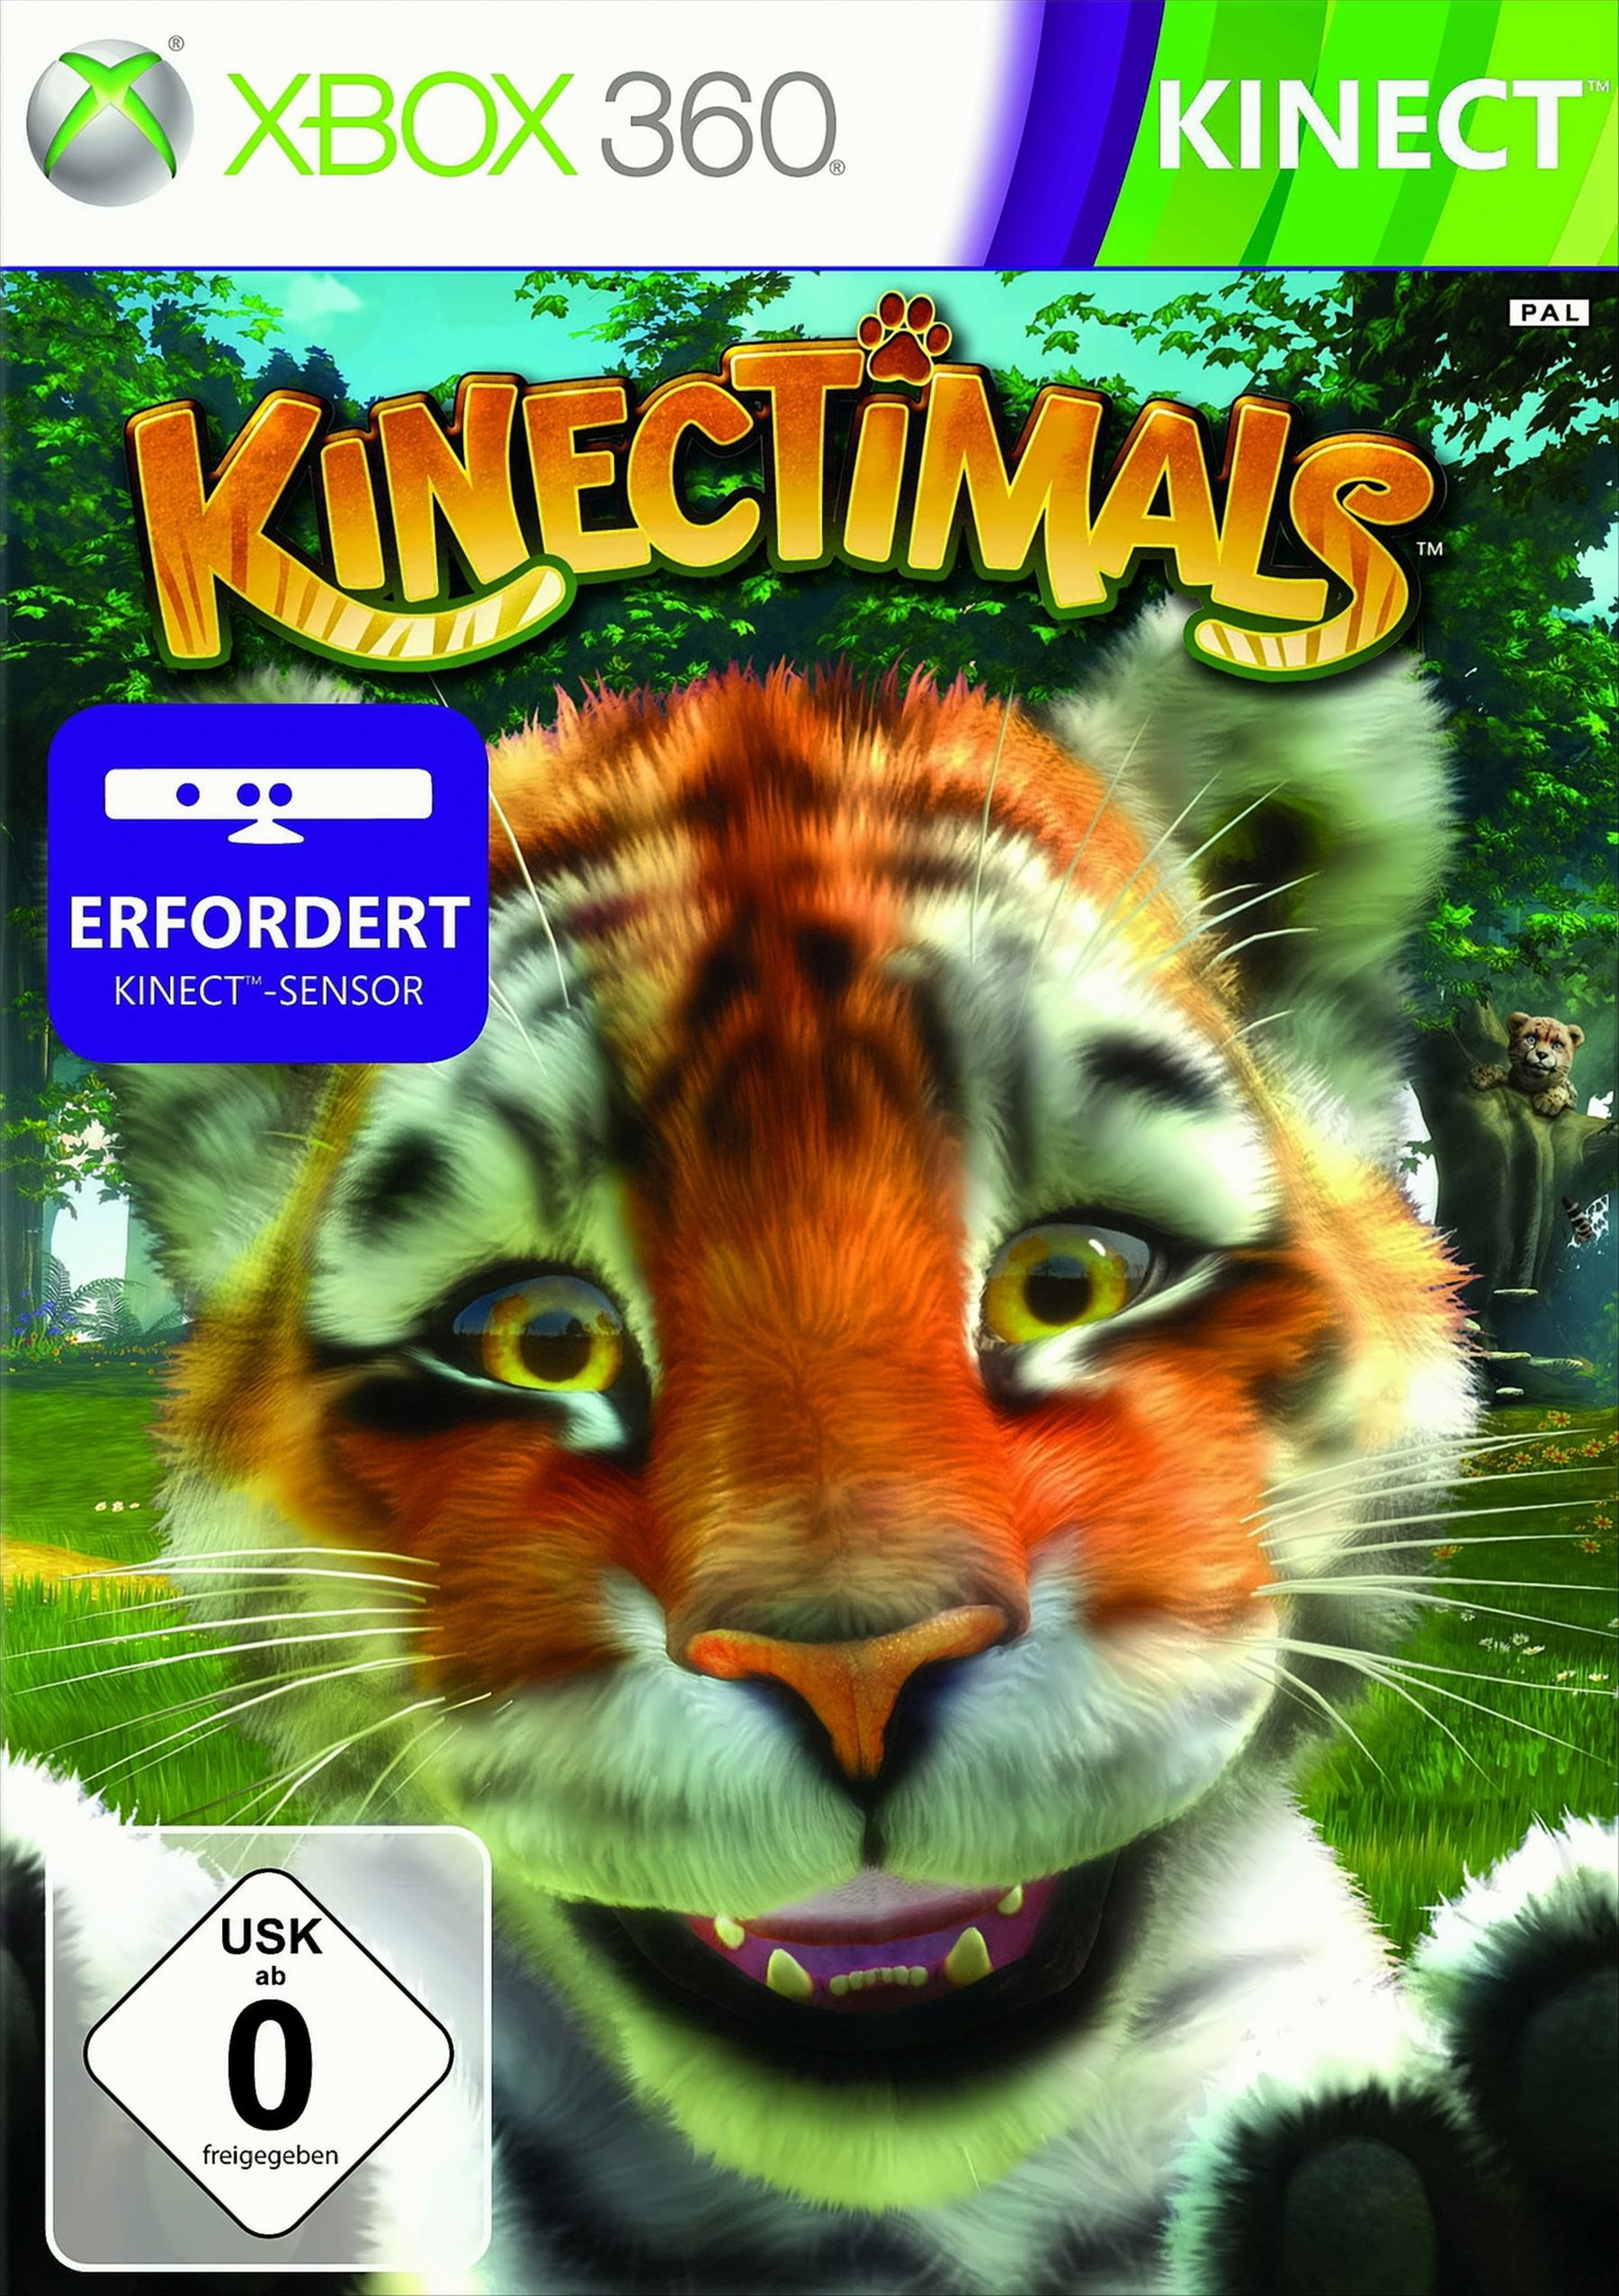 Kinectimals - [Xbox 360